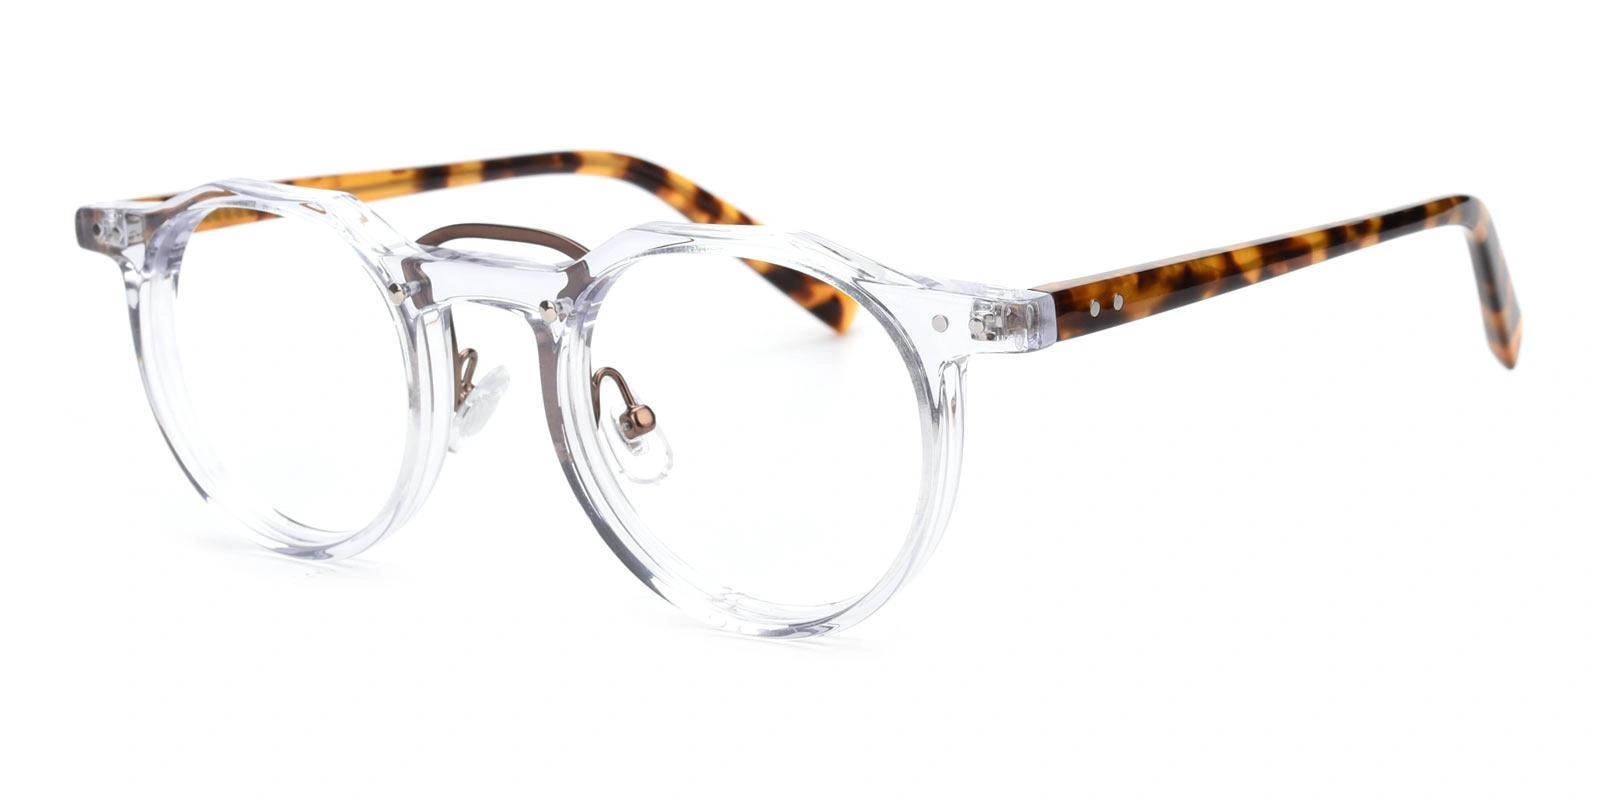 Famivity Fclear Acetate Eyeglasses , NosePads Frames from ABBE Glasses